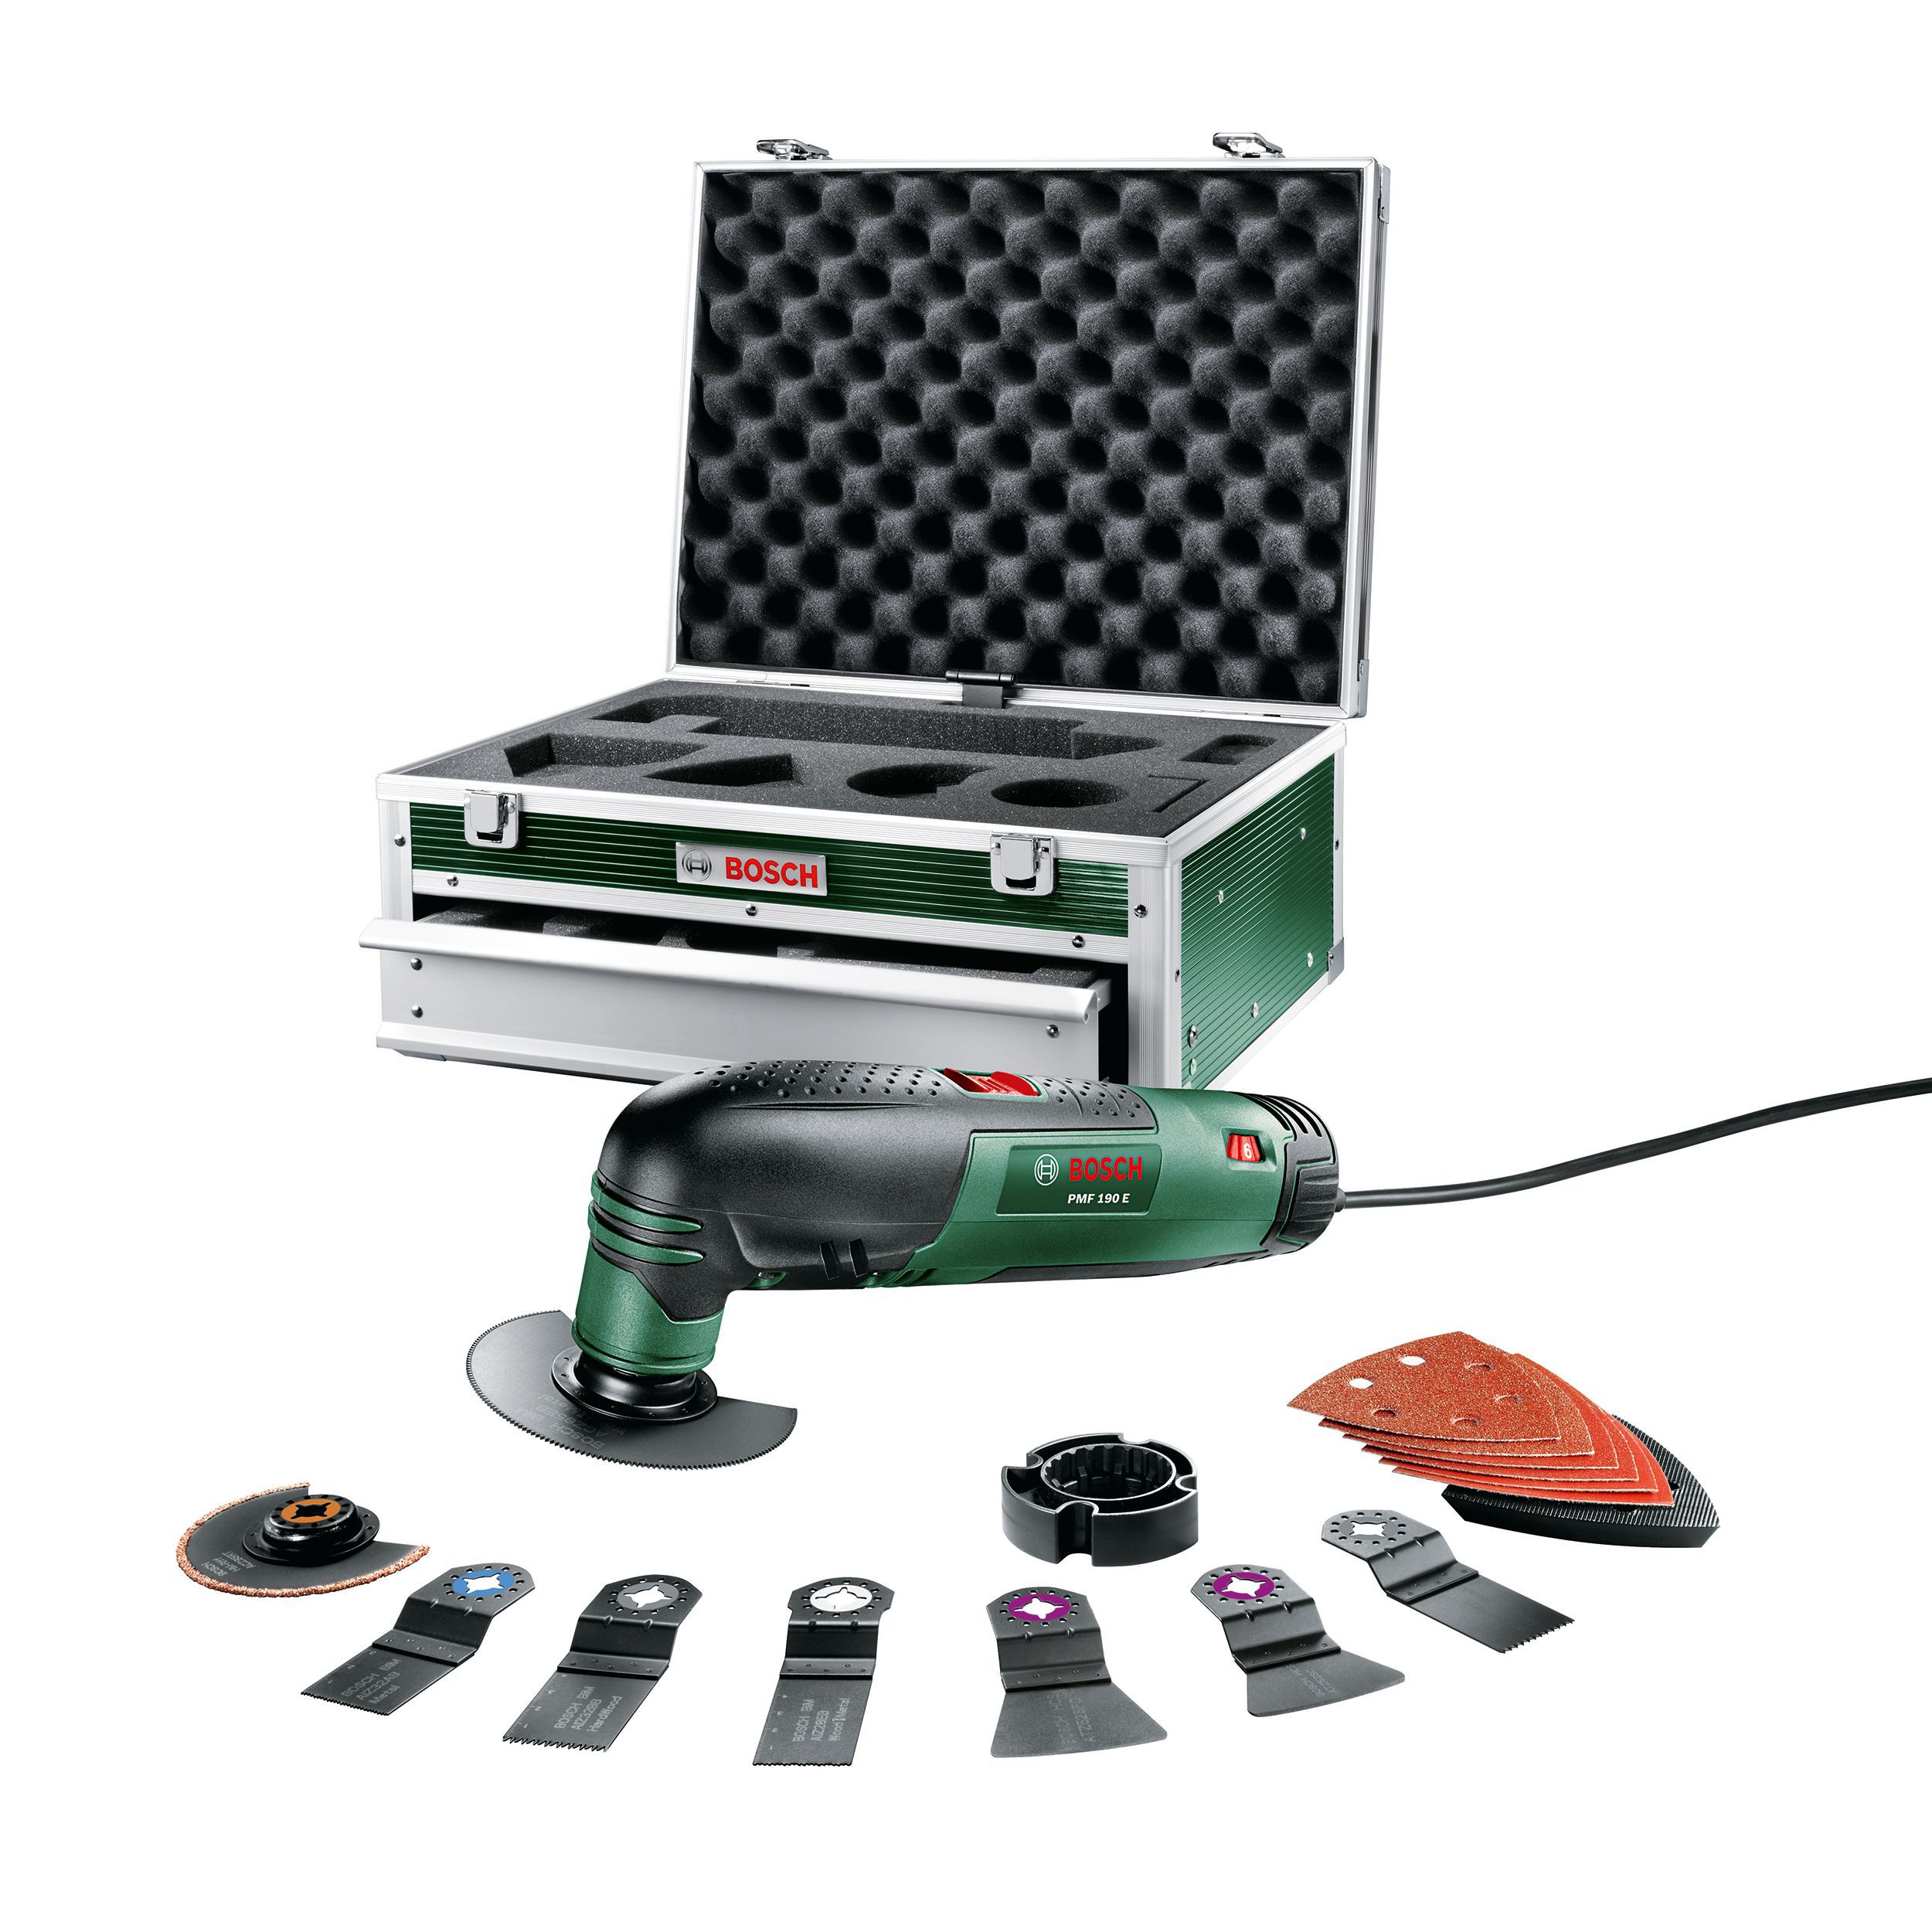 Bosch multi tool kit